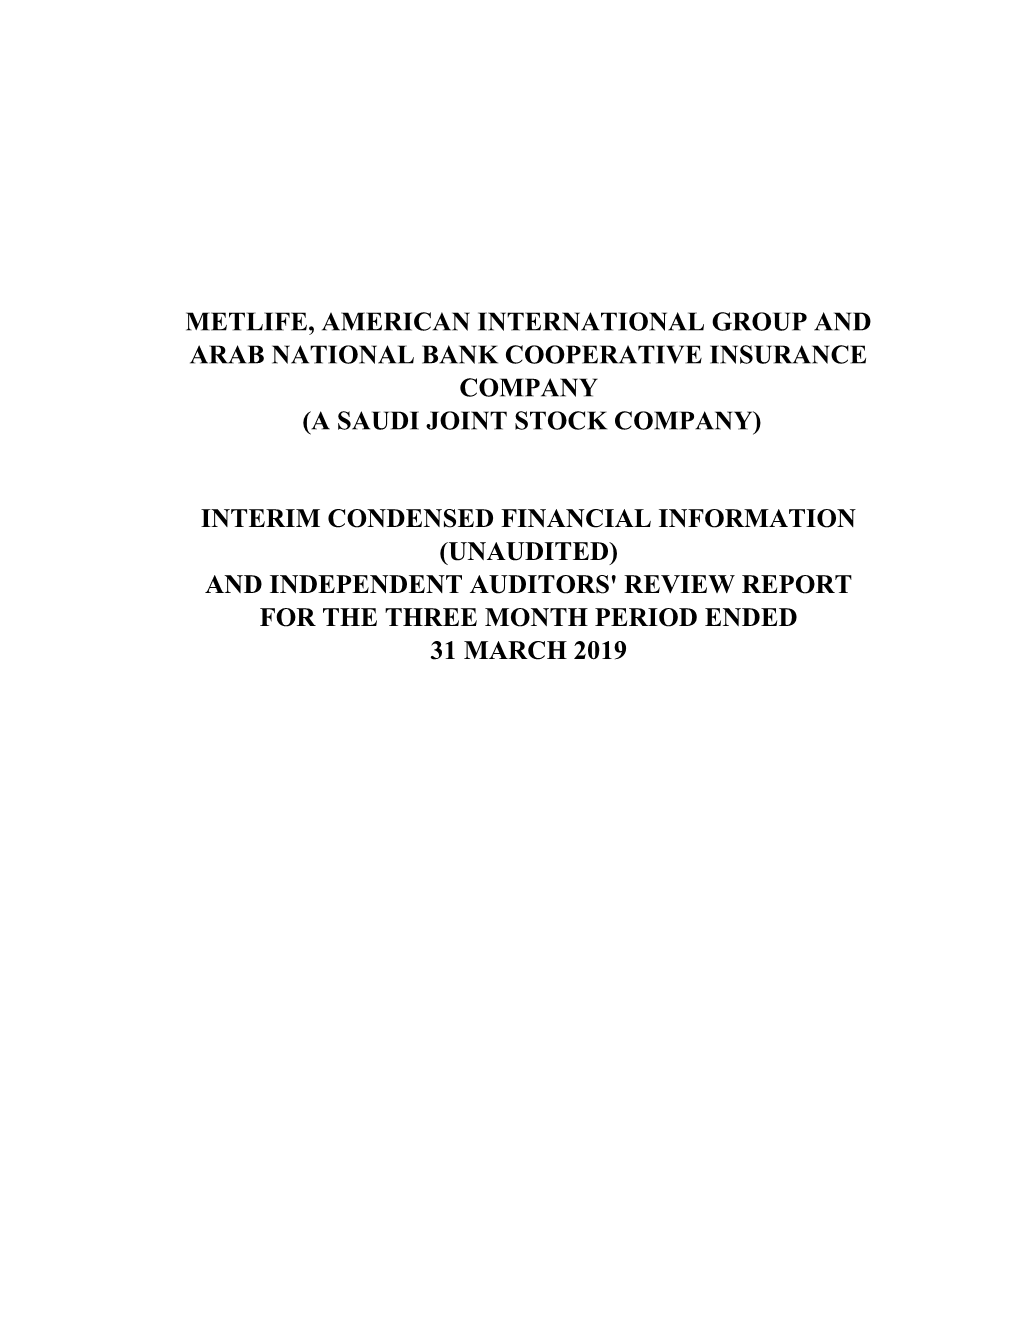 Metlife, American International Group and Arab National Bank Cooperative Insurance Company (A Saudi Joint Stock Company)